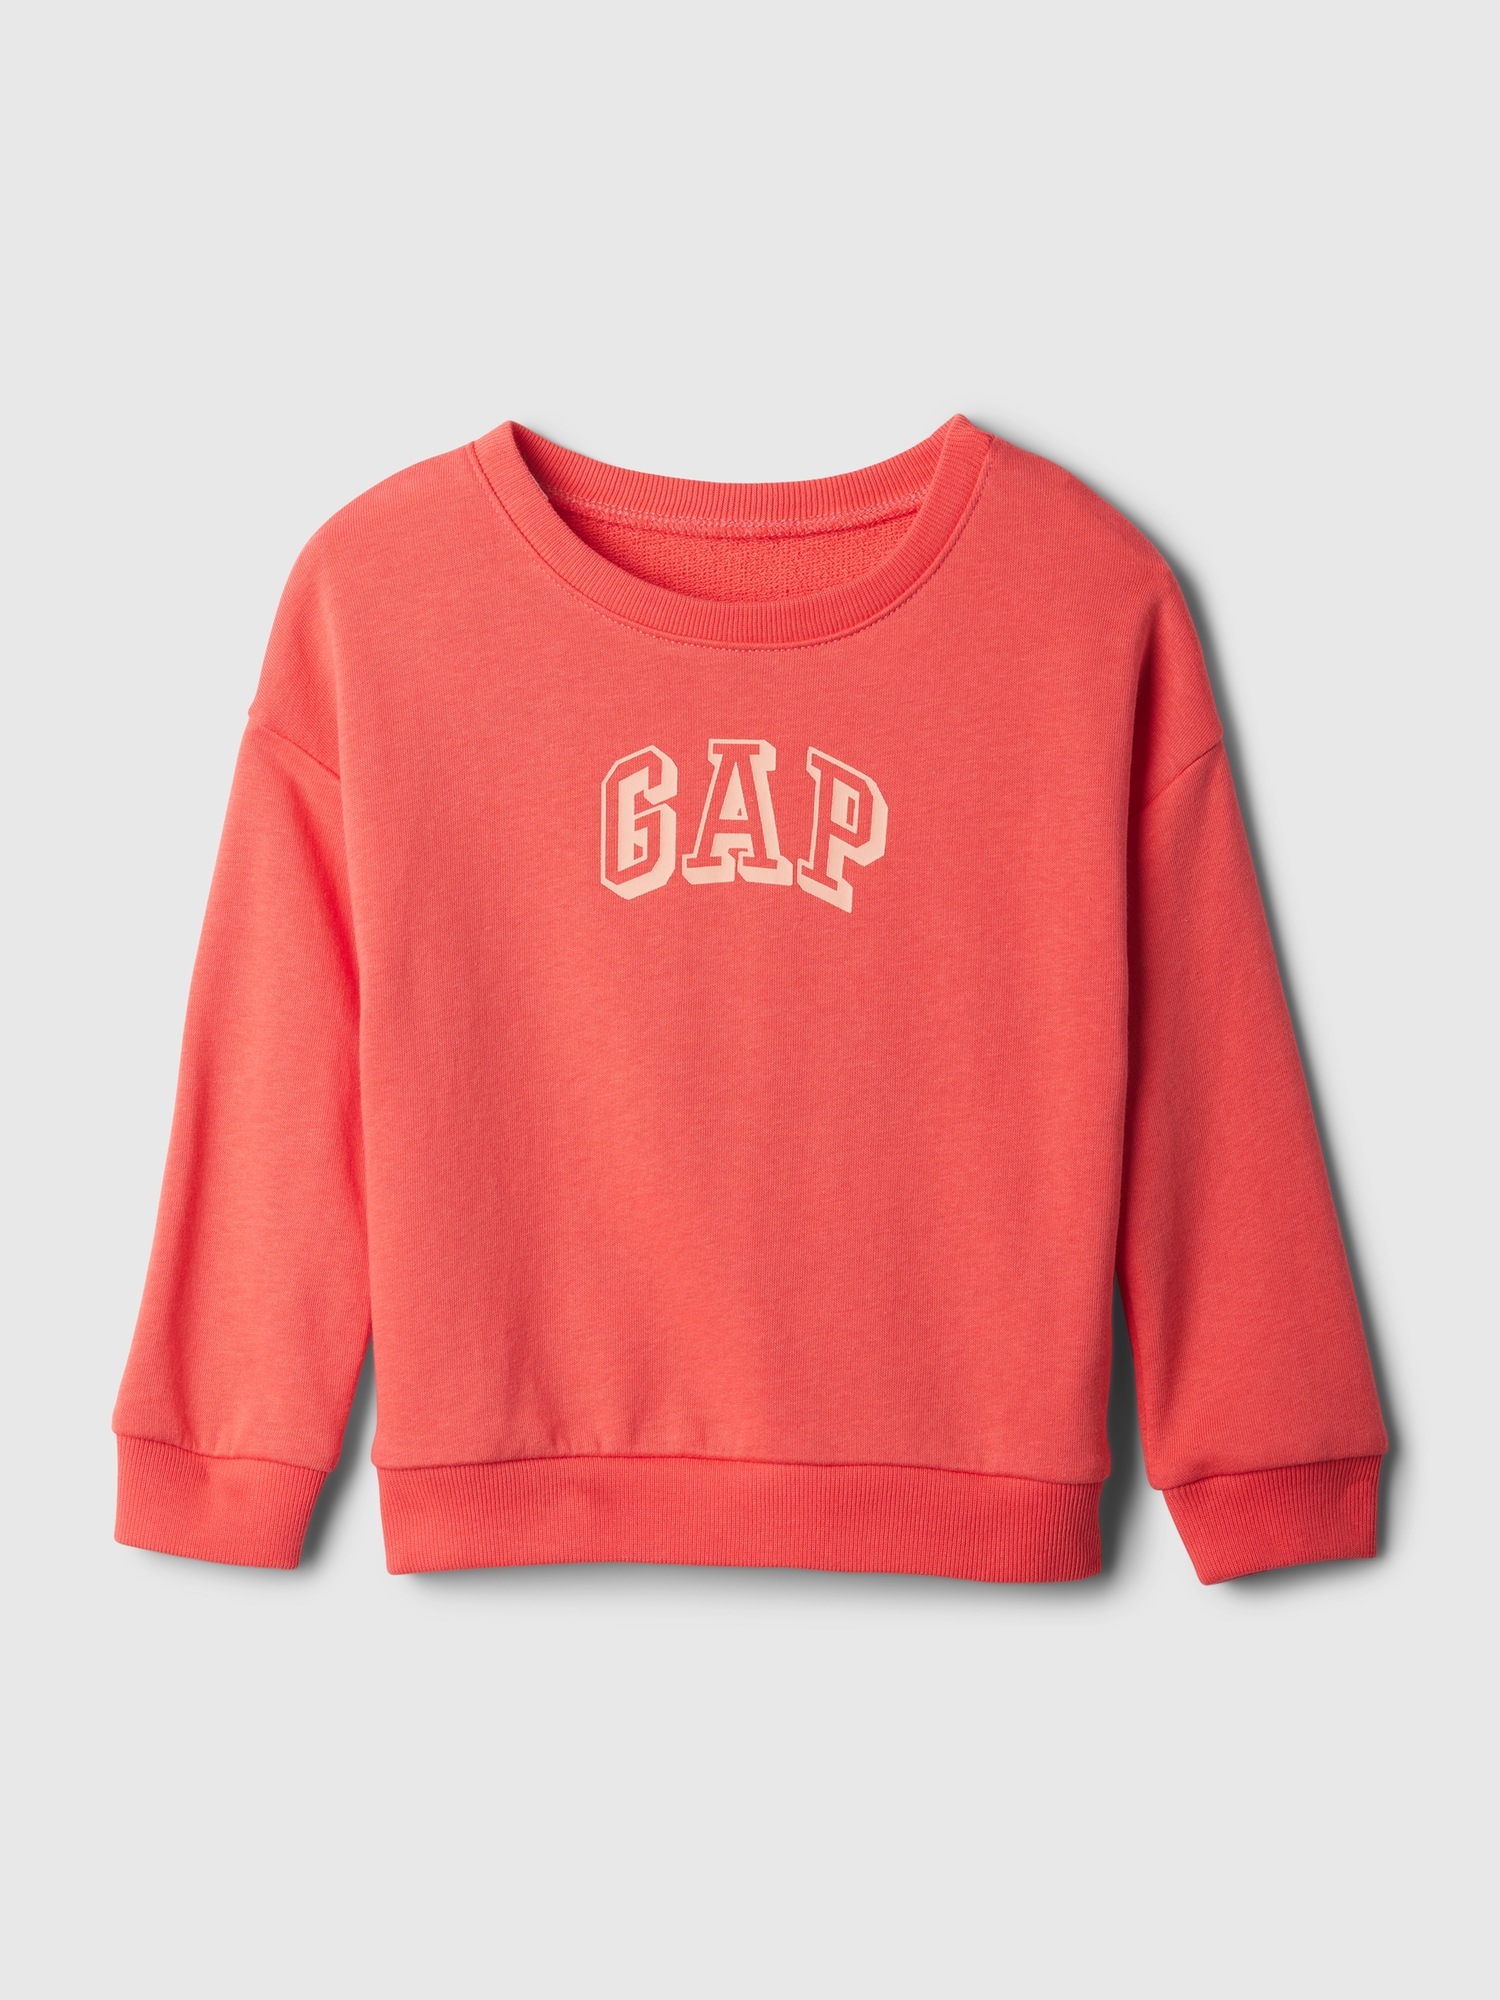 GAP Kids Sweatshirt with Logo - Boys